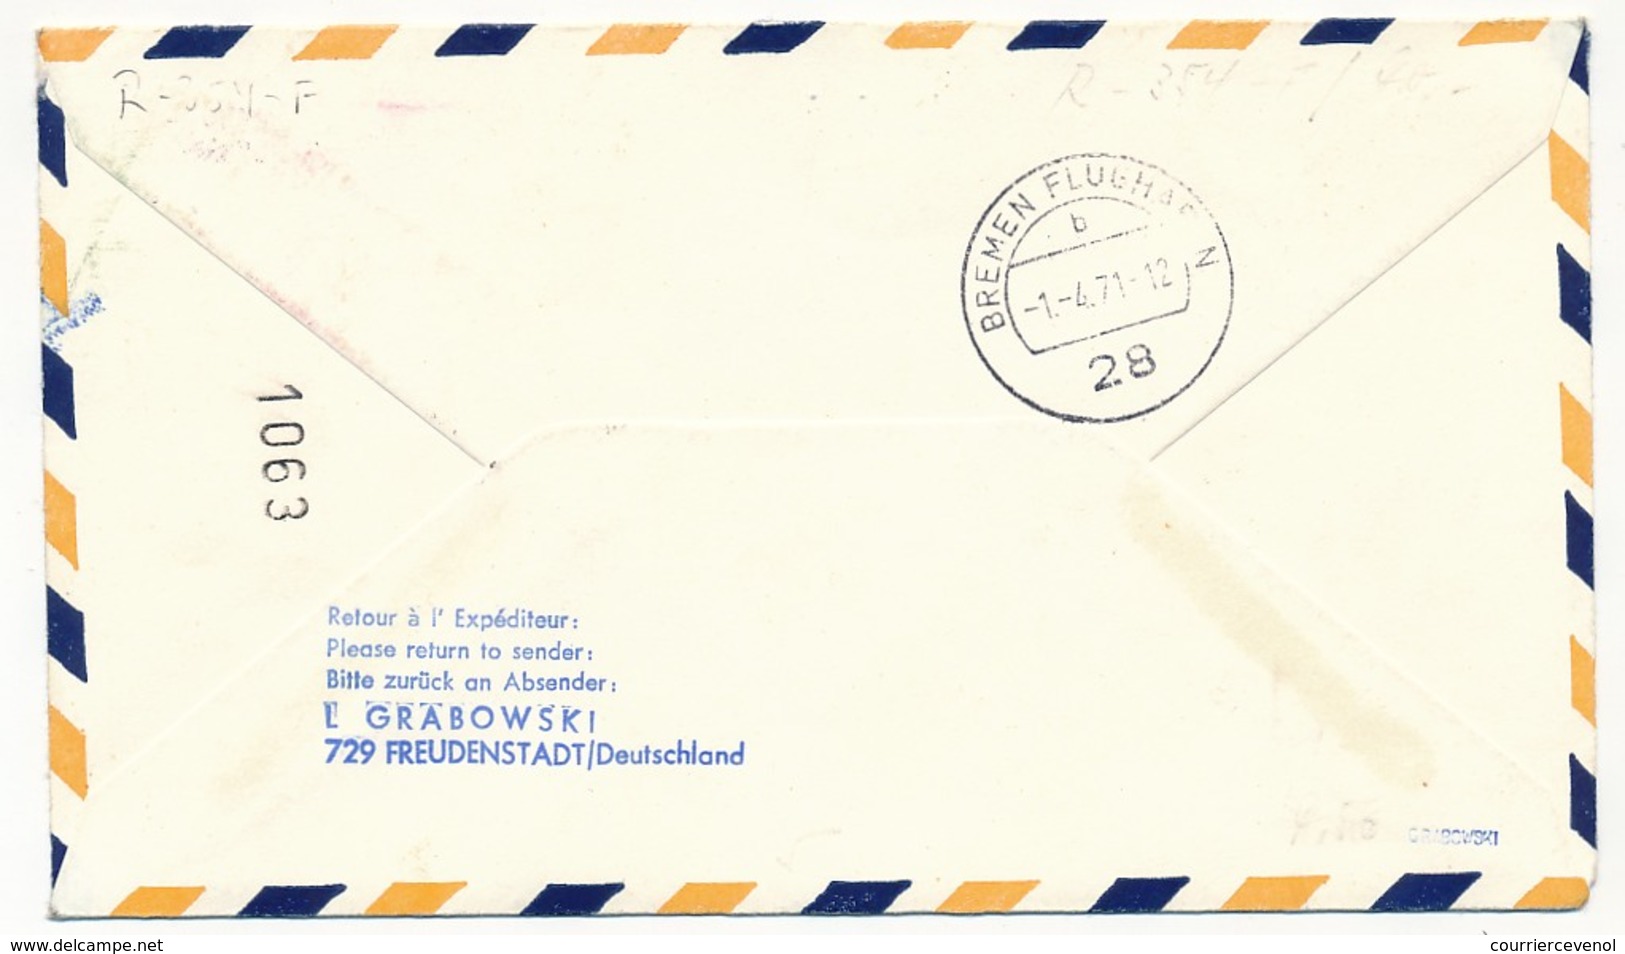 FRANCE - Enveloppe - Premier Vol BREME => MUNICH => BREME / LH 975/818 Lufthansa - 1971 - First Flight Covers